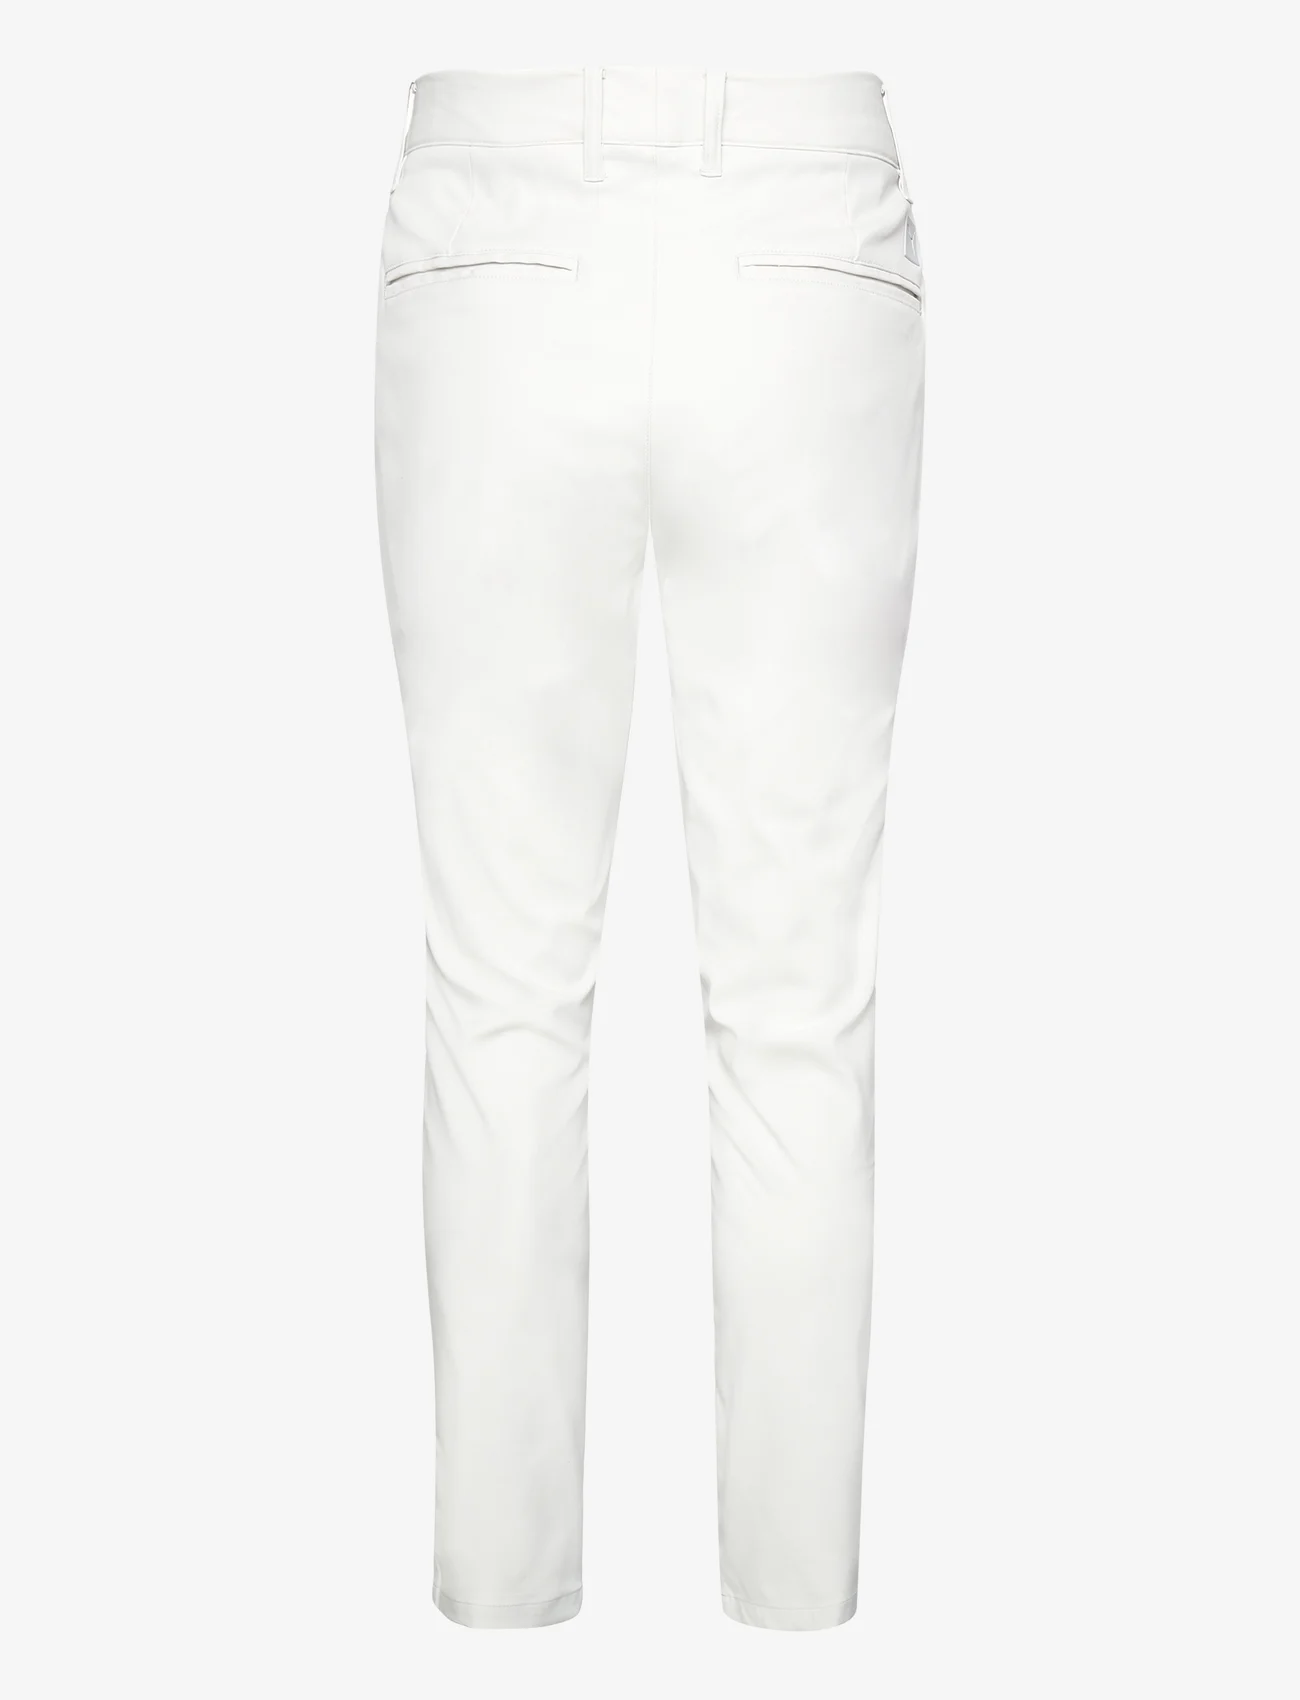 PUMA Golf - Dealer Tailored Pant - spodnie do golfa - sedate gray - 1